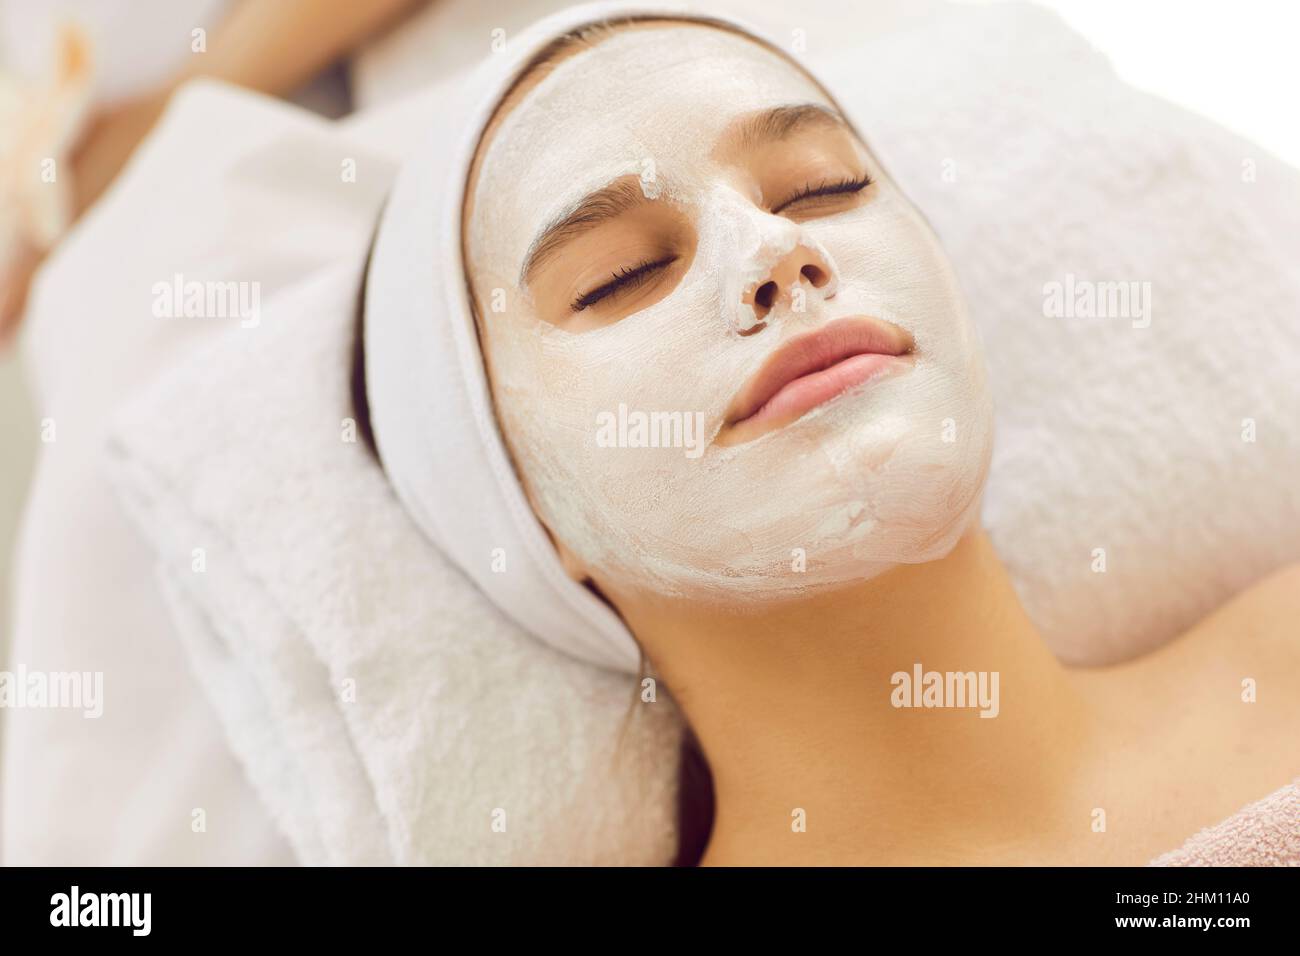 Beautiful woman in beauty salon does skin care treatments and enjoys moisturizing face mask. Stock Photo